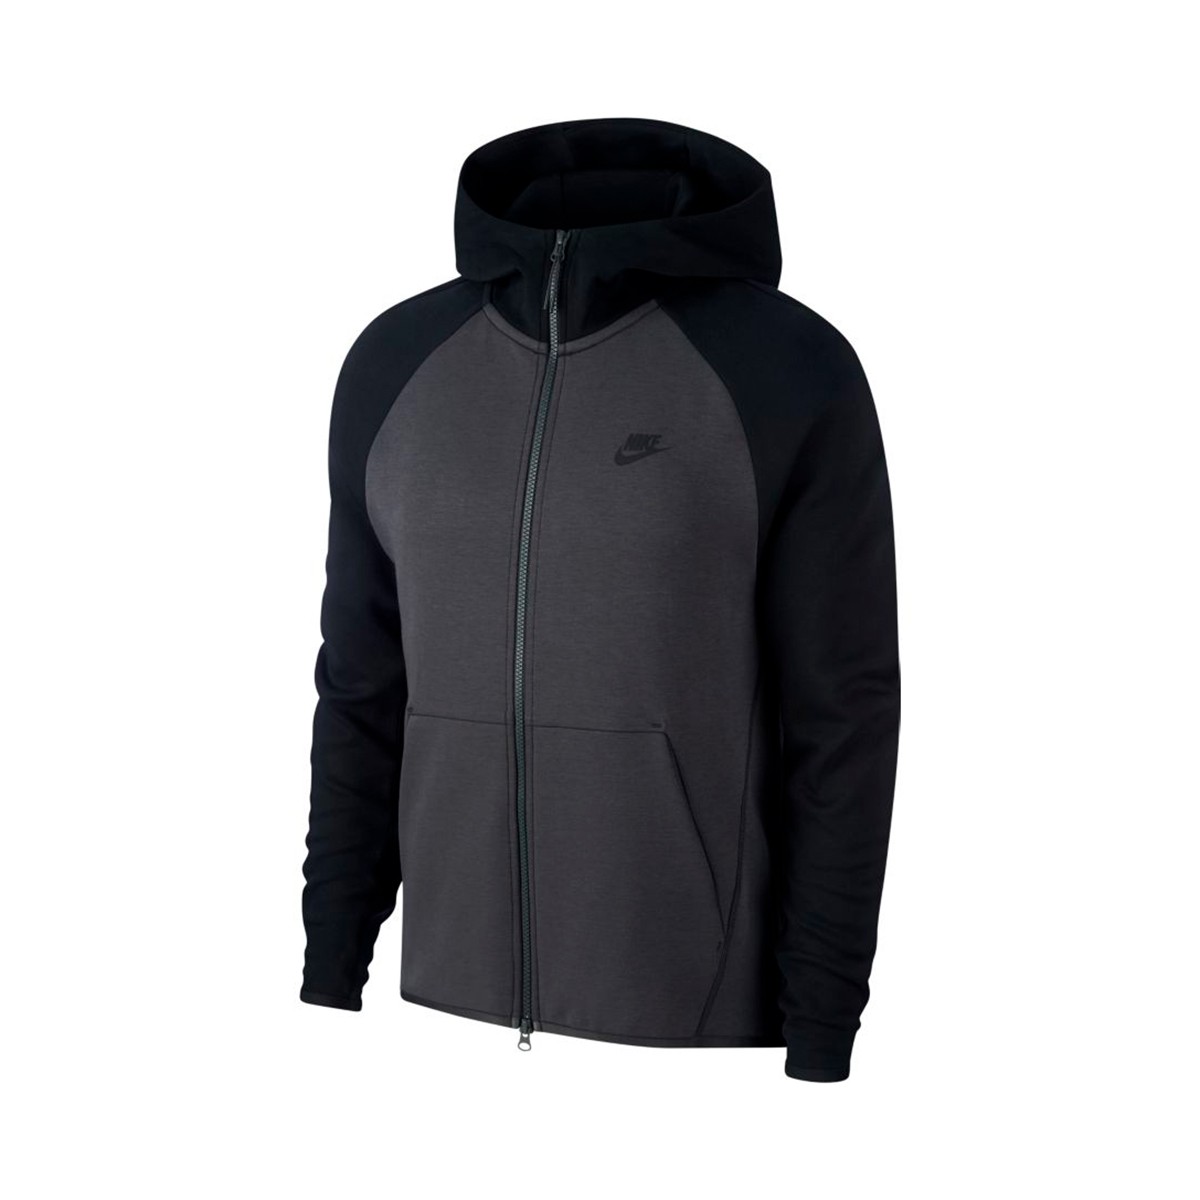 Chaqueta Nike Sportswear Tech Fleece 2019 Anthracite-Black 